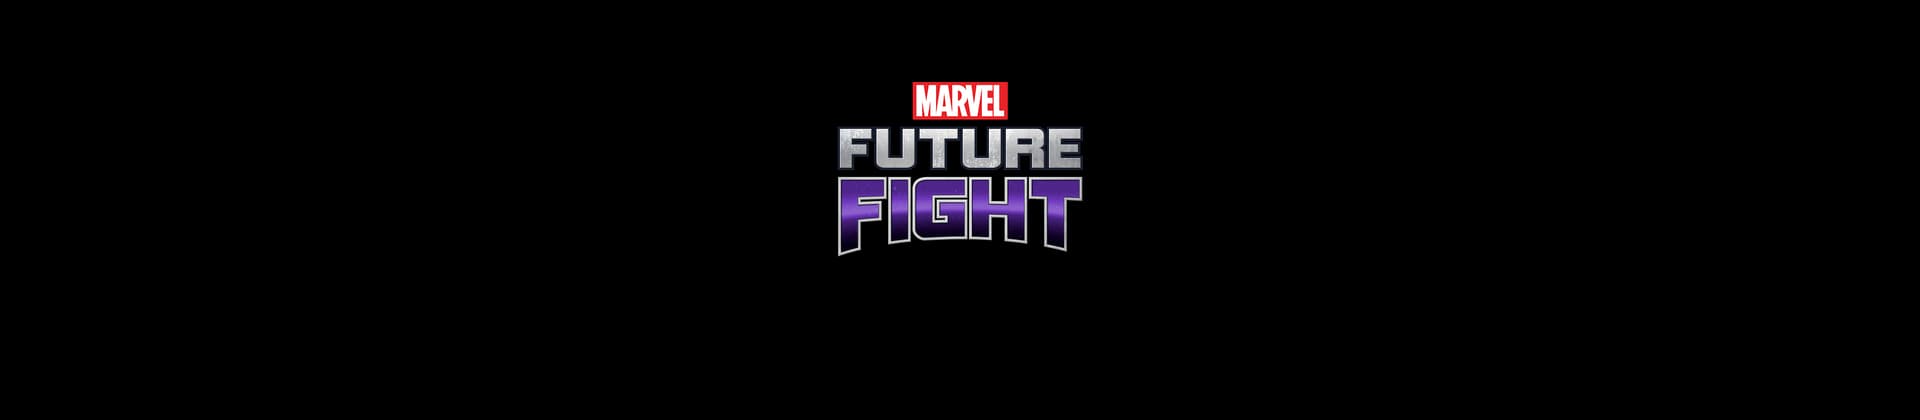 Marvel Future Fight Game Logo on Black